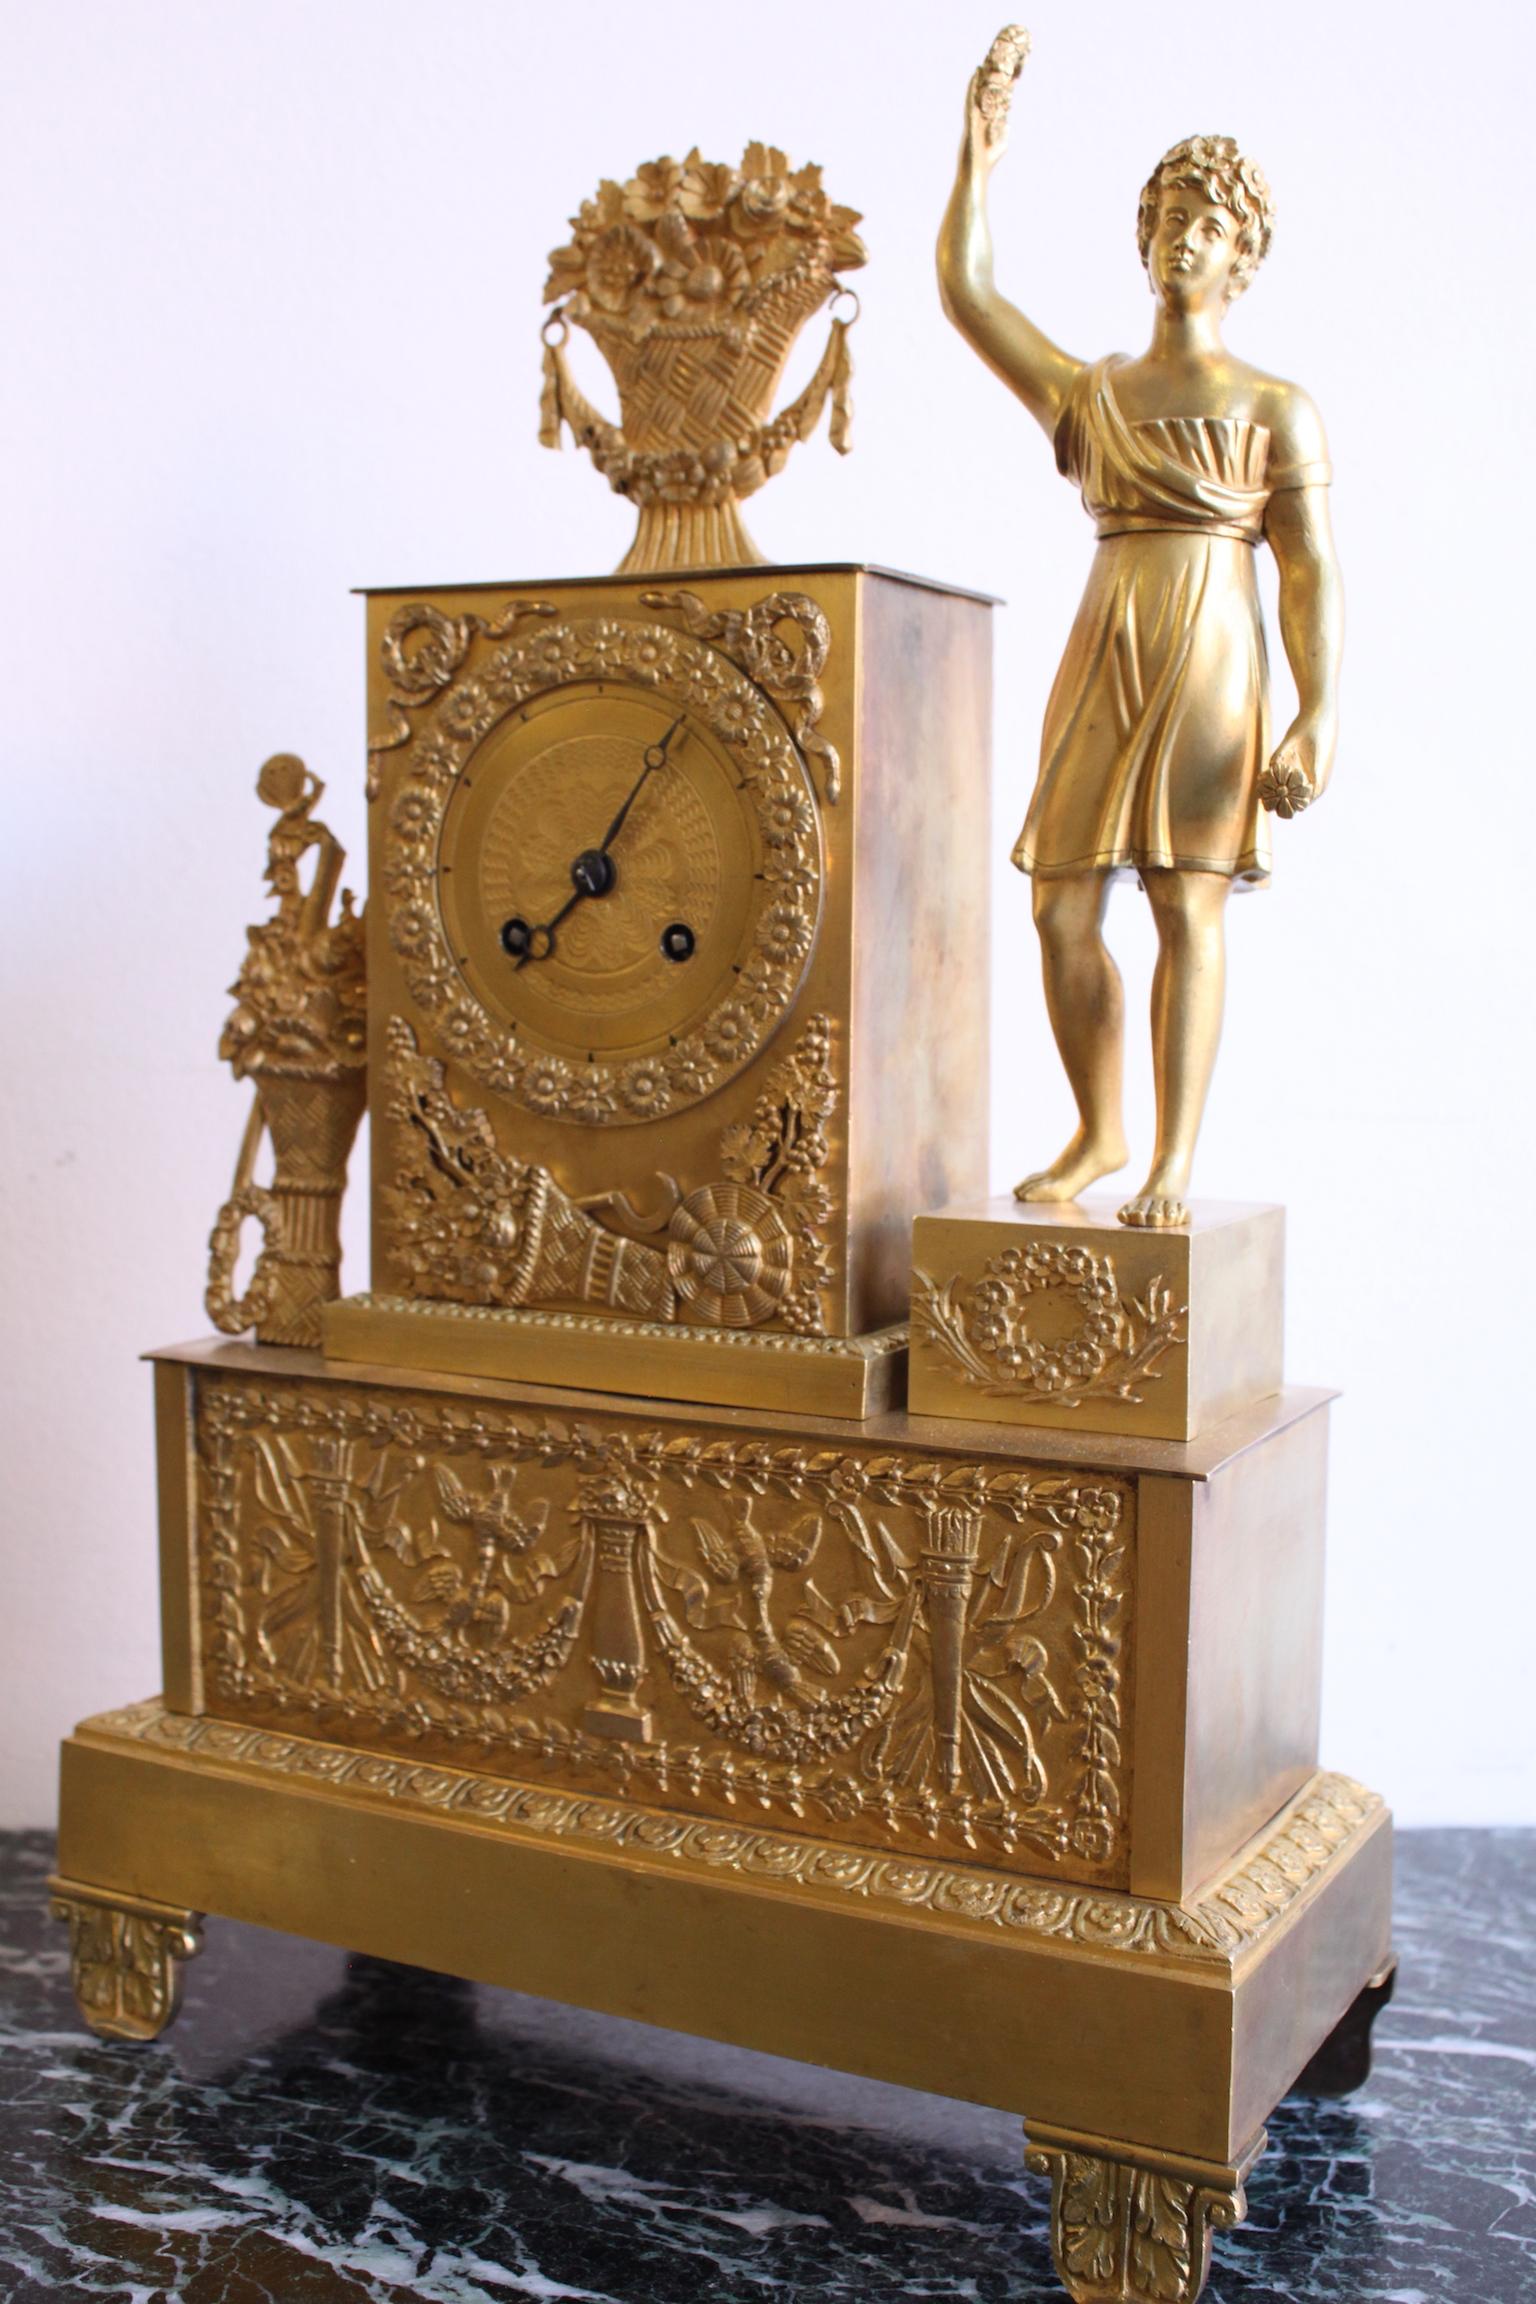 Restauration 19th Century French Restoration Clock